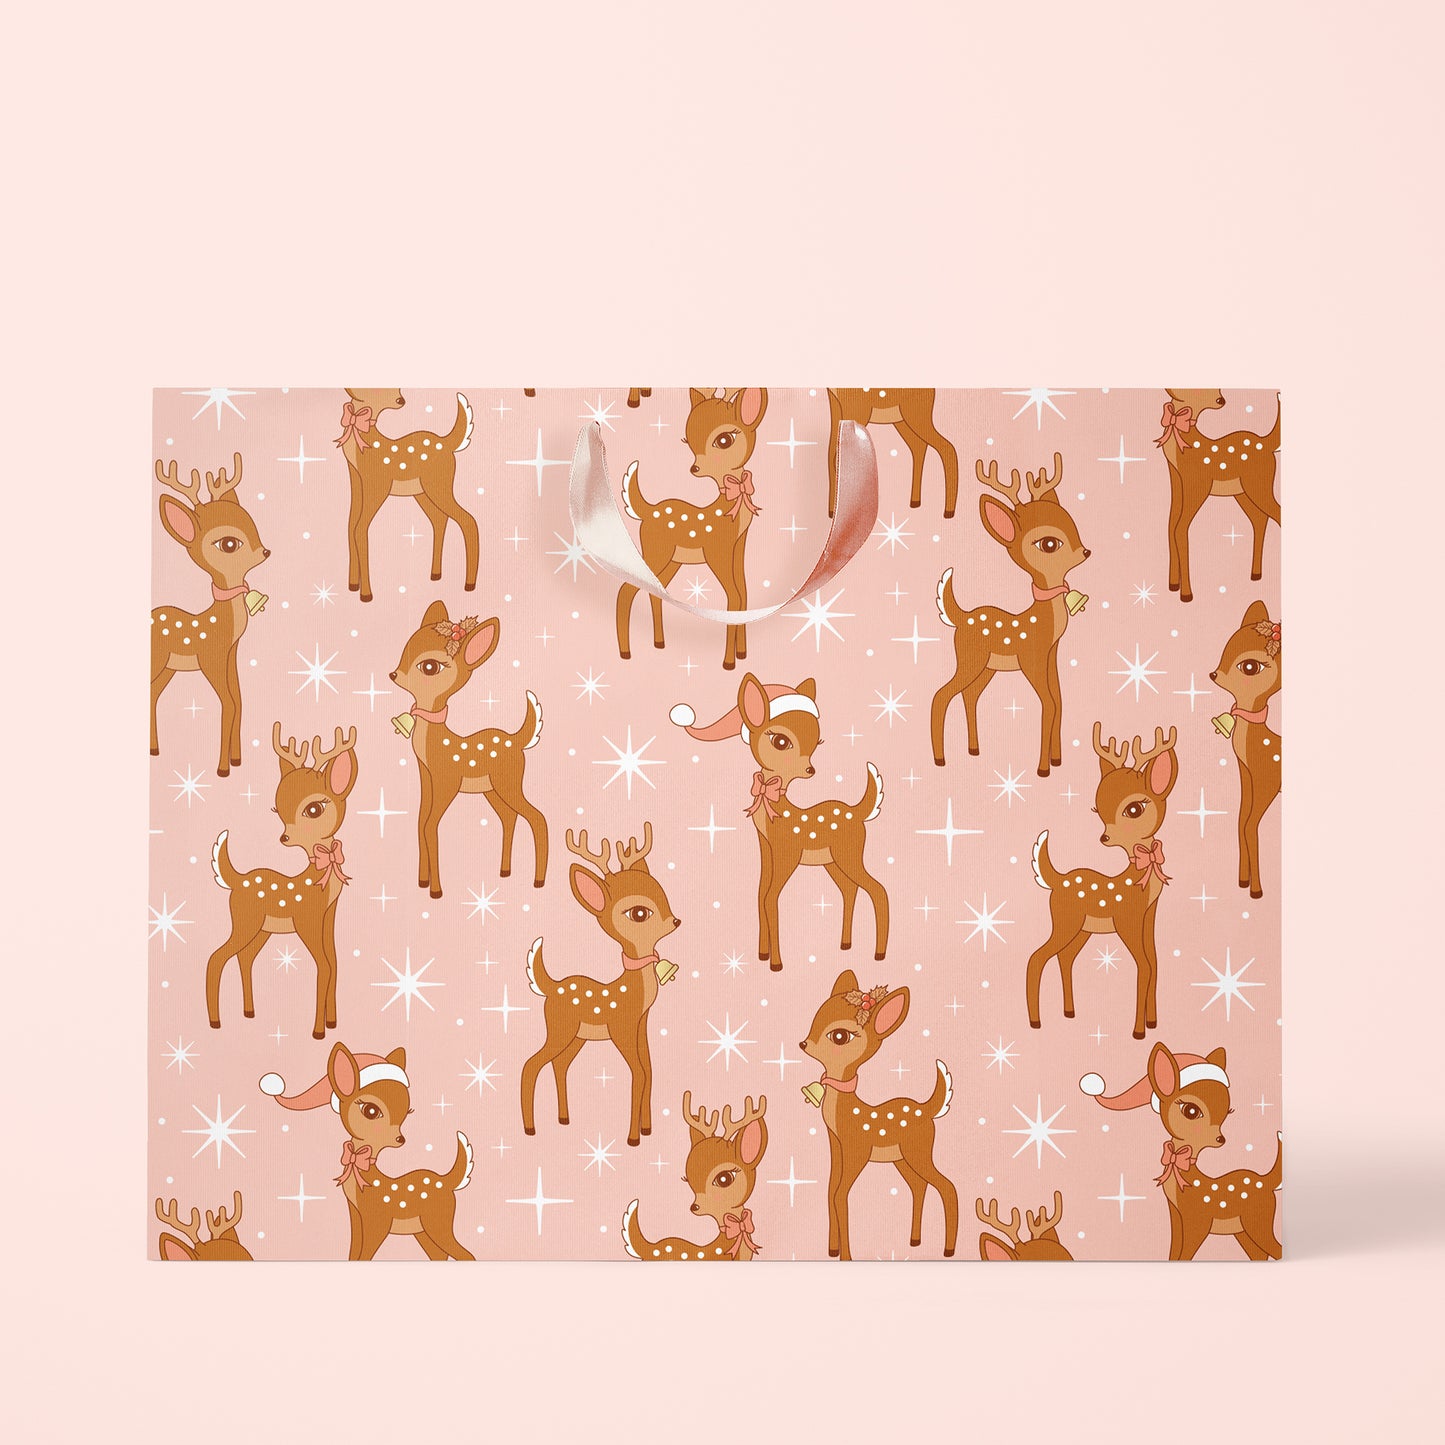 Retro Deer Holiday Gift Bag